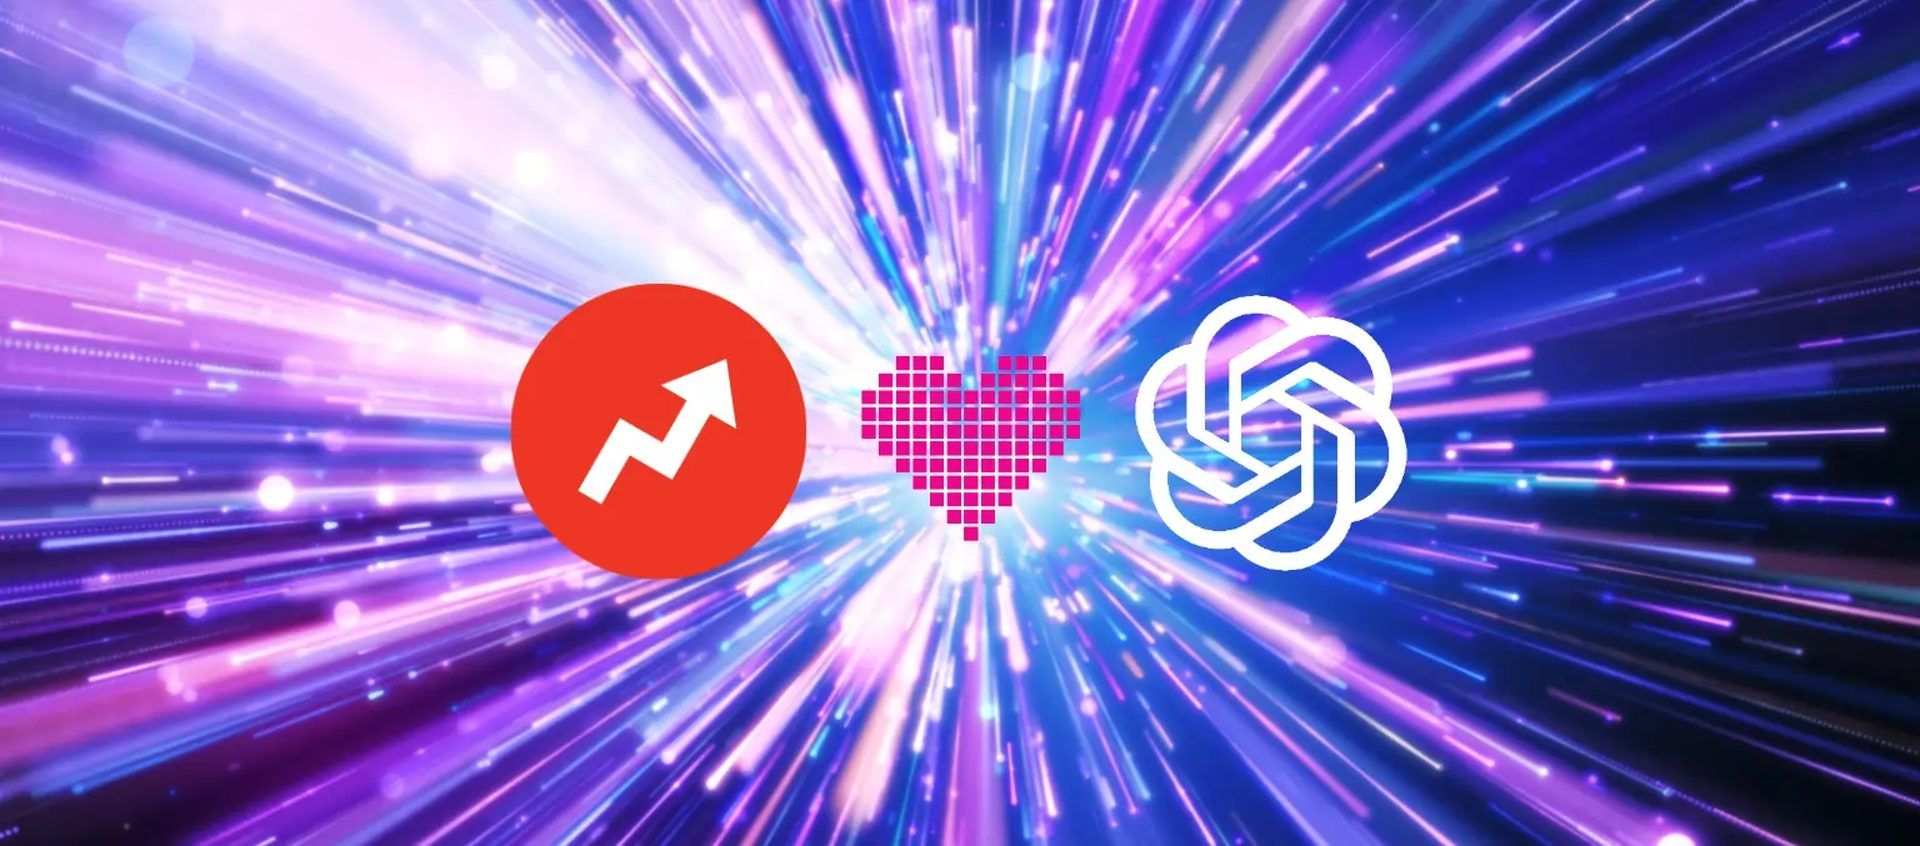 Accord BuzzFeed ChatGPT : les actions de Buzzfeed explosent d’enthousiasme face à OpenAI